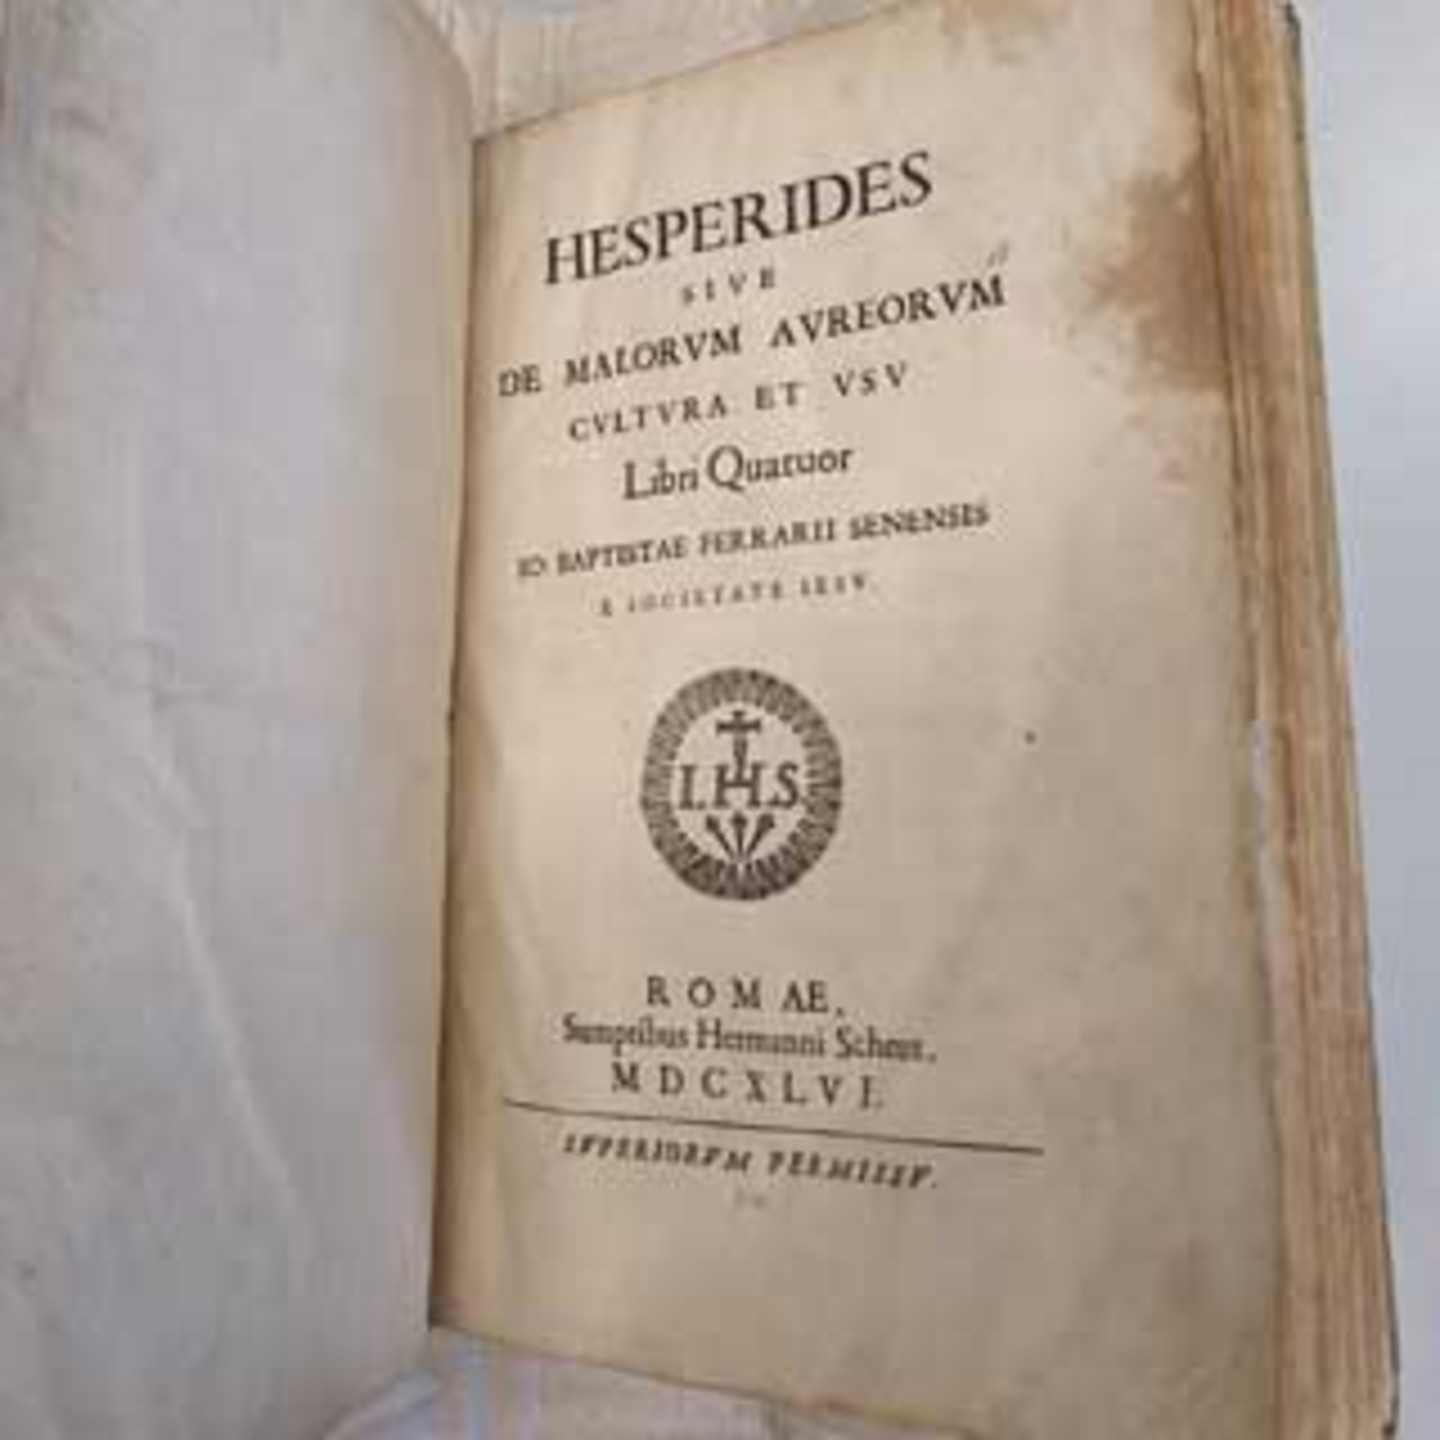 Foto des Titelblattes der Leihgabe " Ferrari, Giovanni Battista ; Rottendorff, Bernhard: Hesperides sive de malorum aureorum cultura et usu ..., 1646".